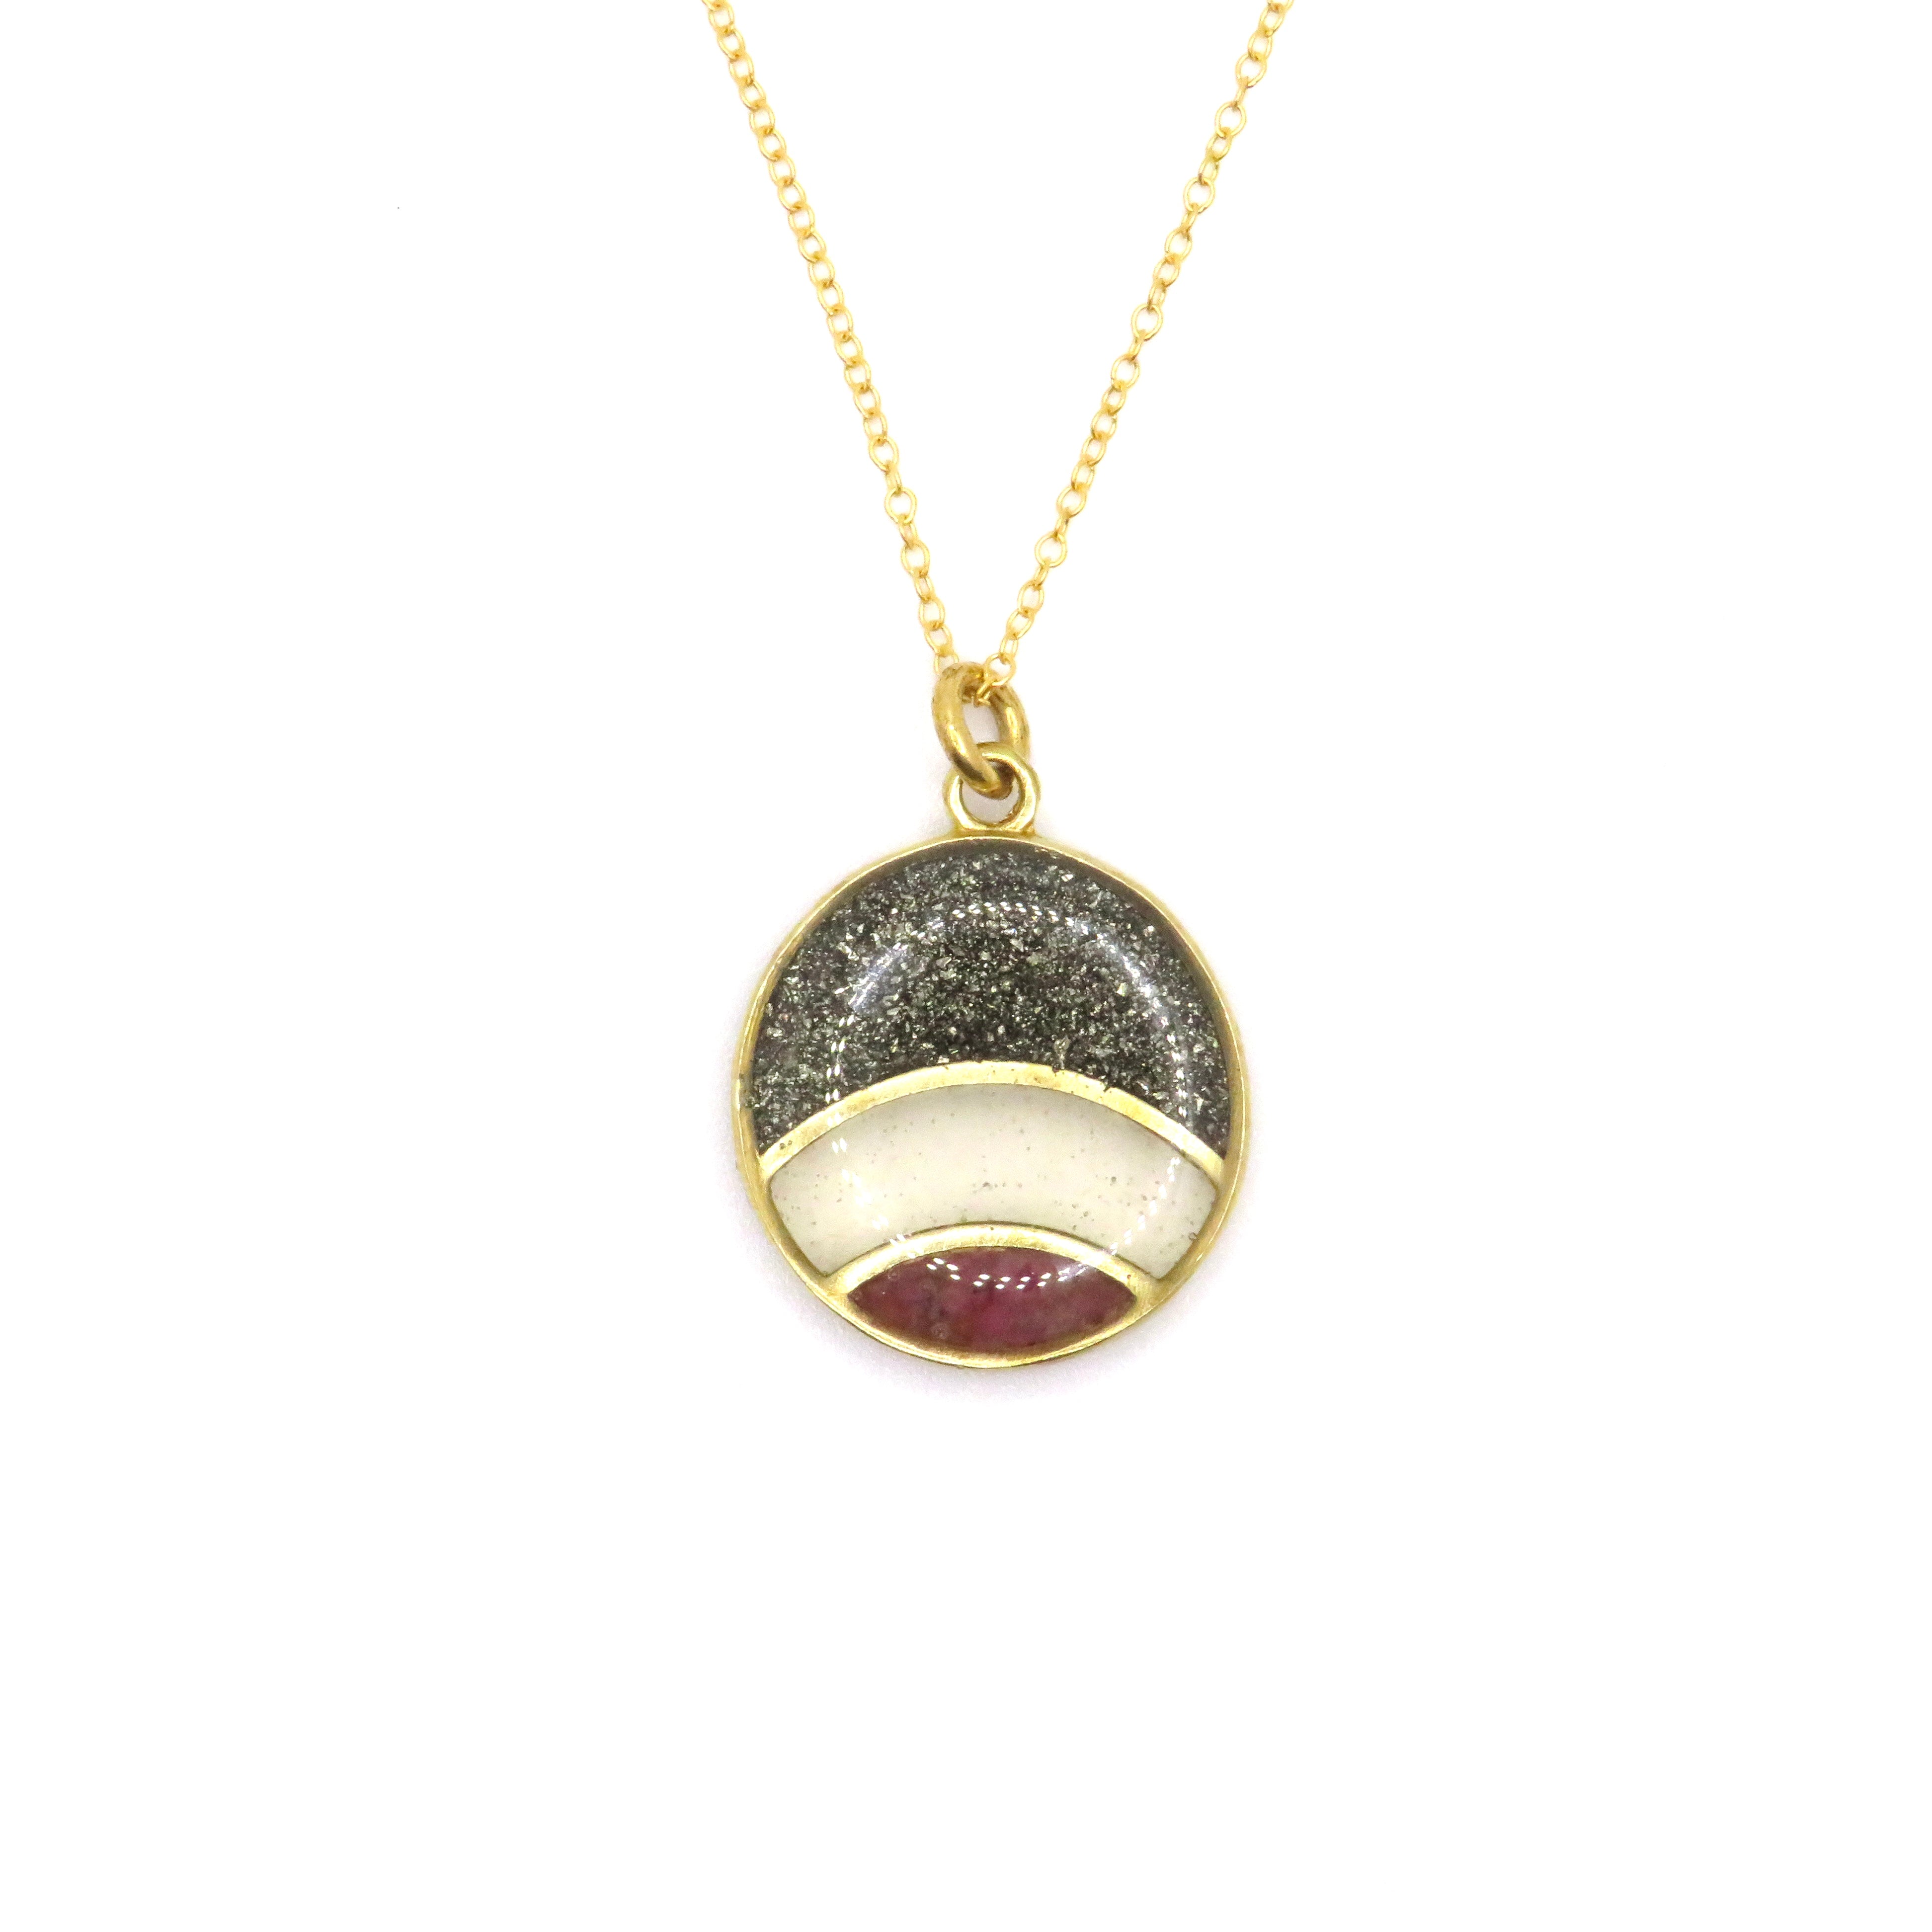 Gold rainbow pendant necklace with precious stones